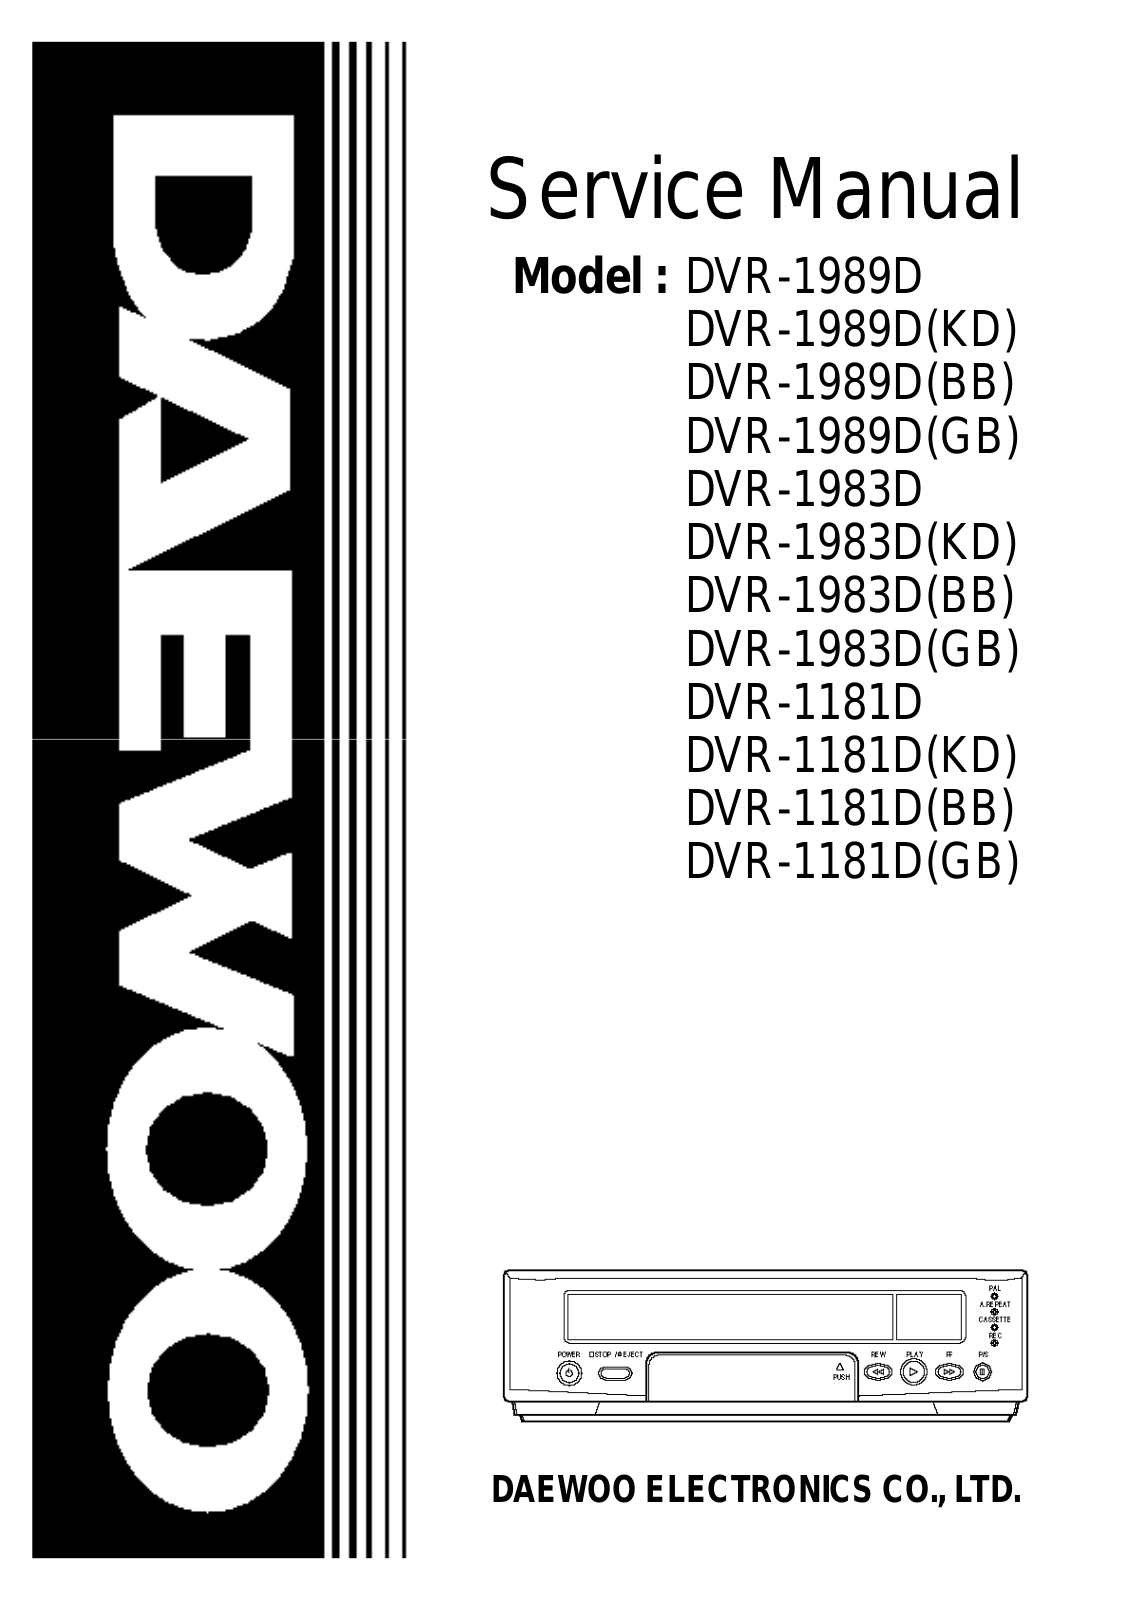 Daewoo DVR-1983D, DVR-1989D, DVR-1181D Service Manual